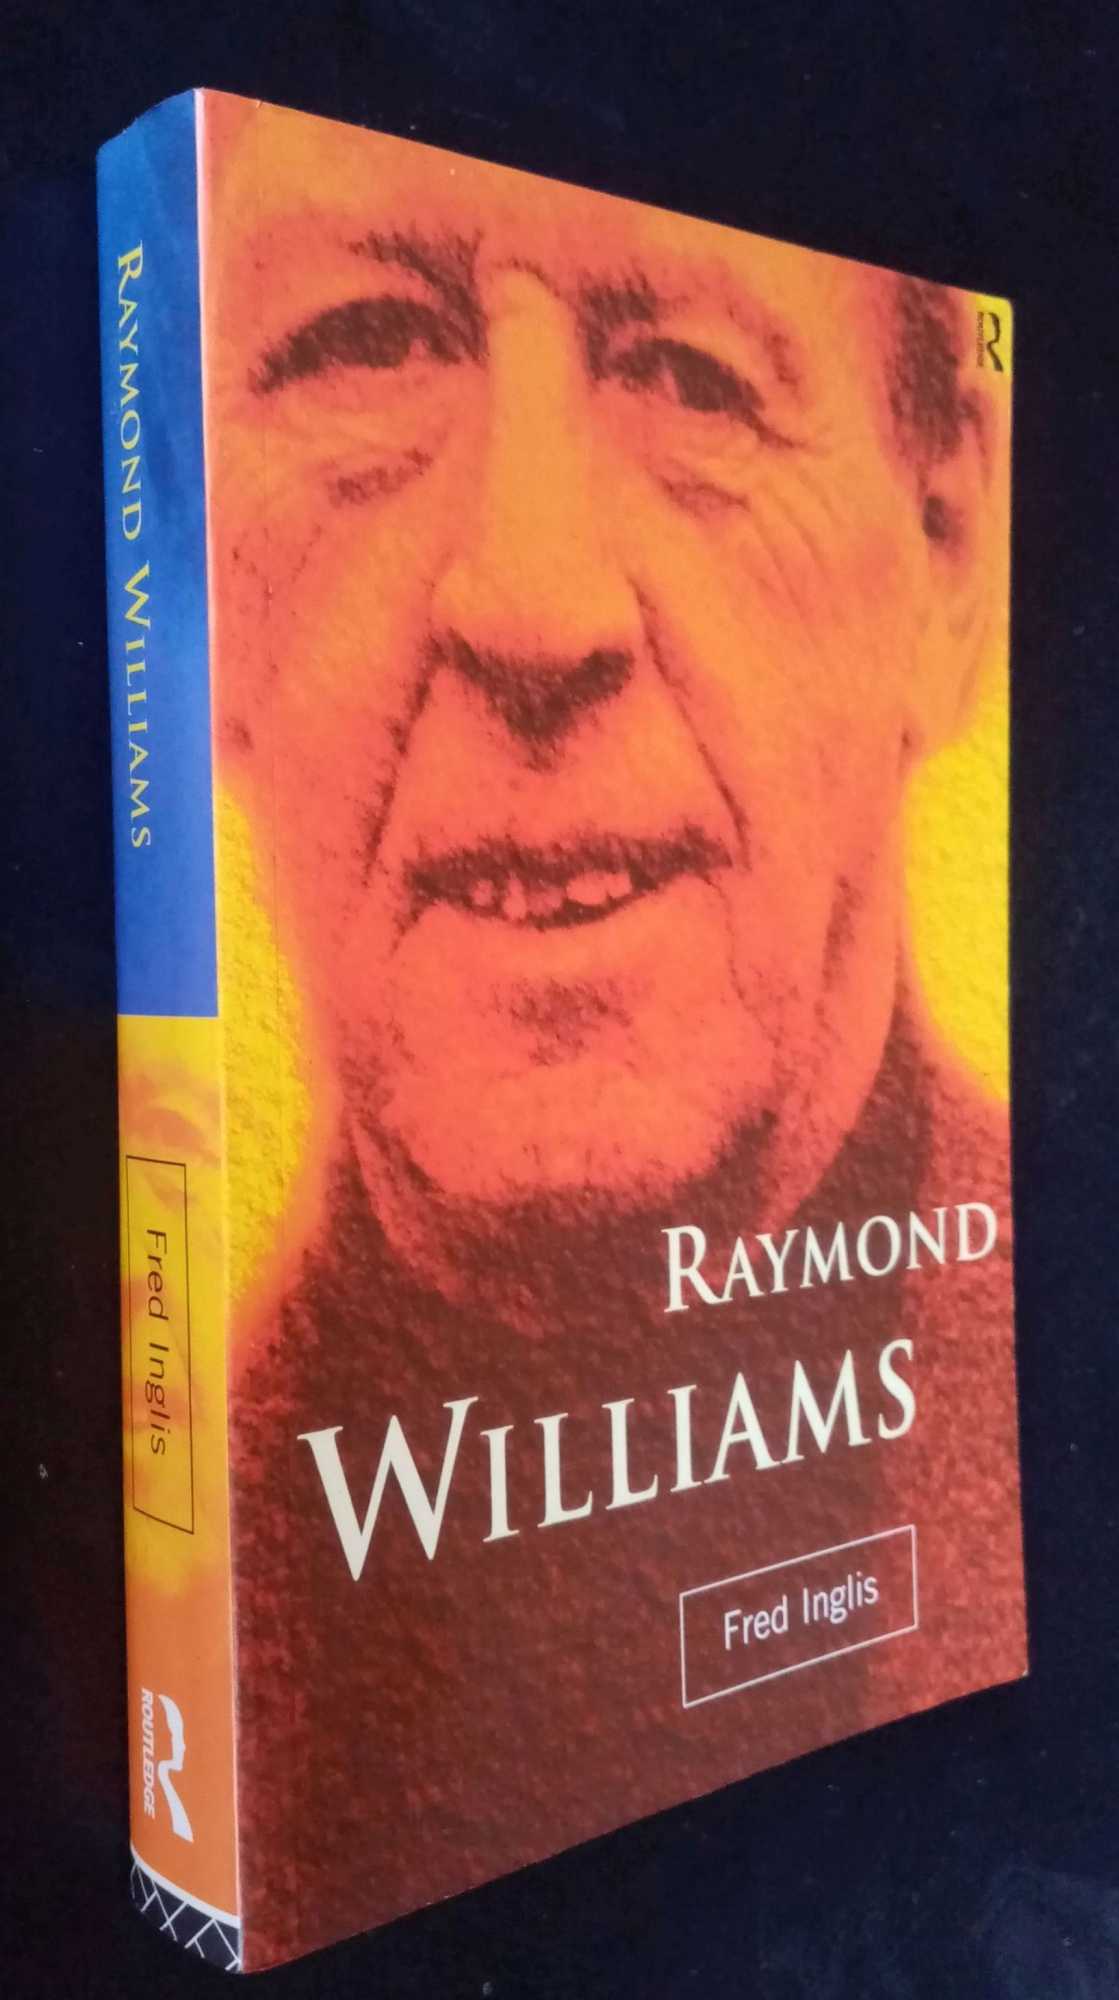 Fred Inglis - Raymond Williams